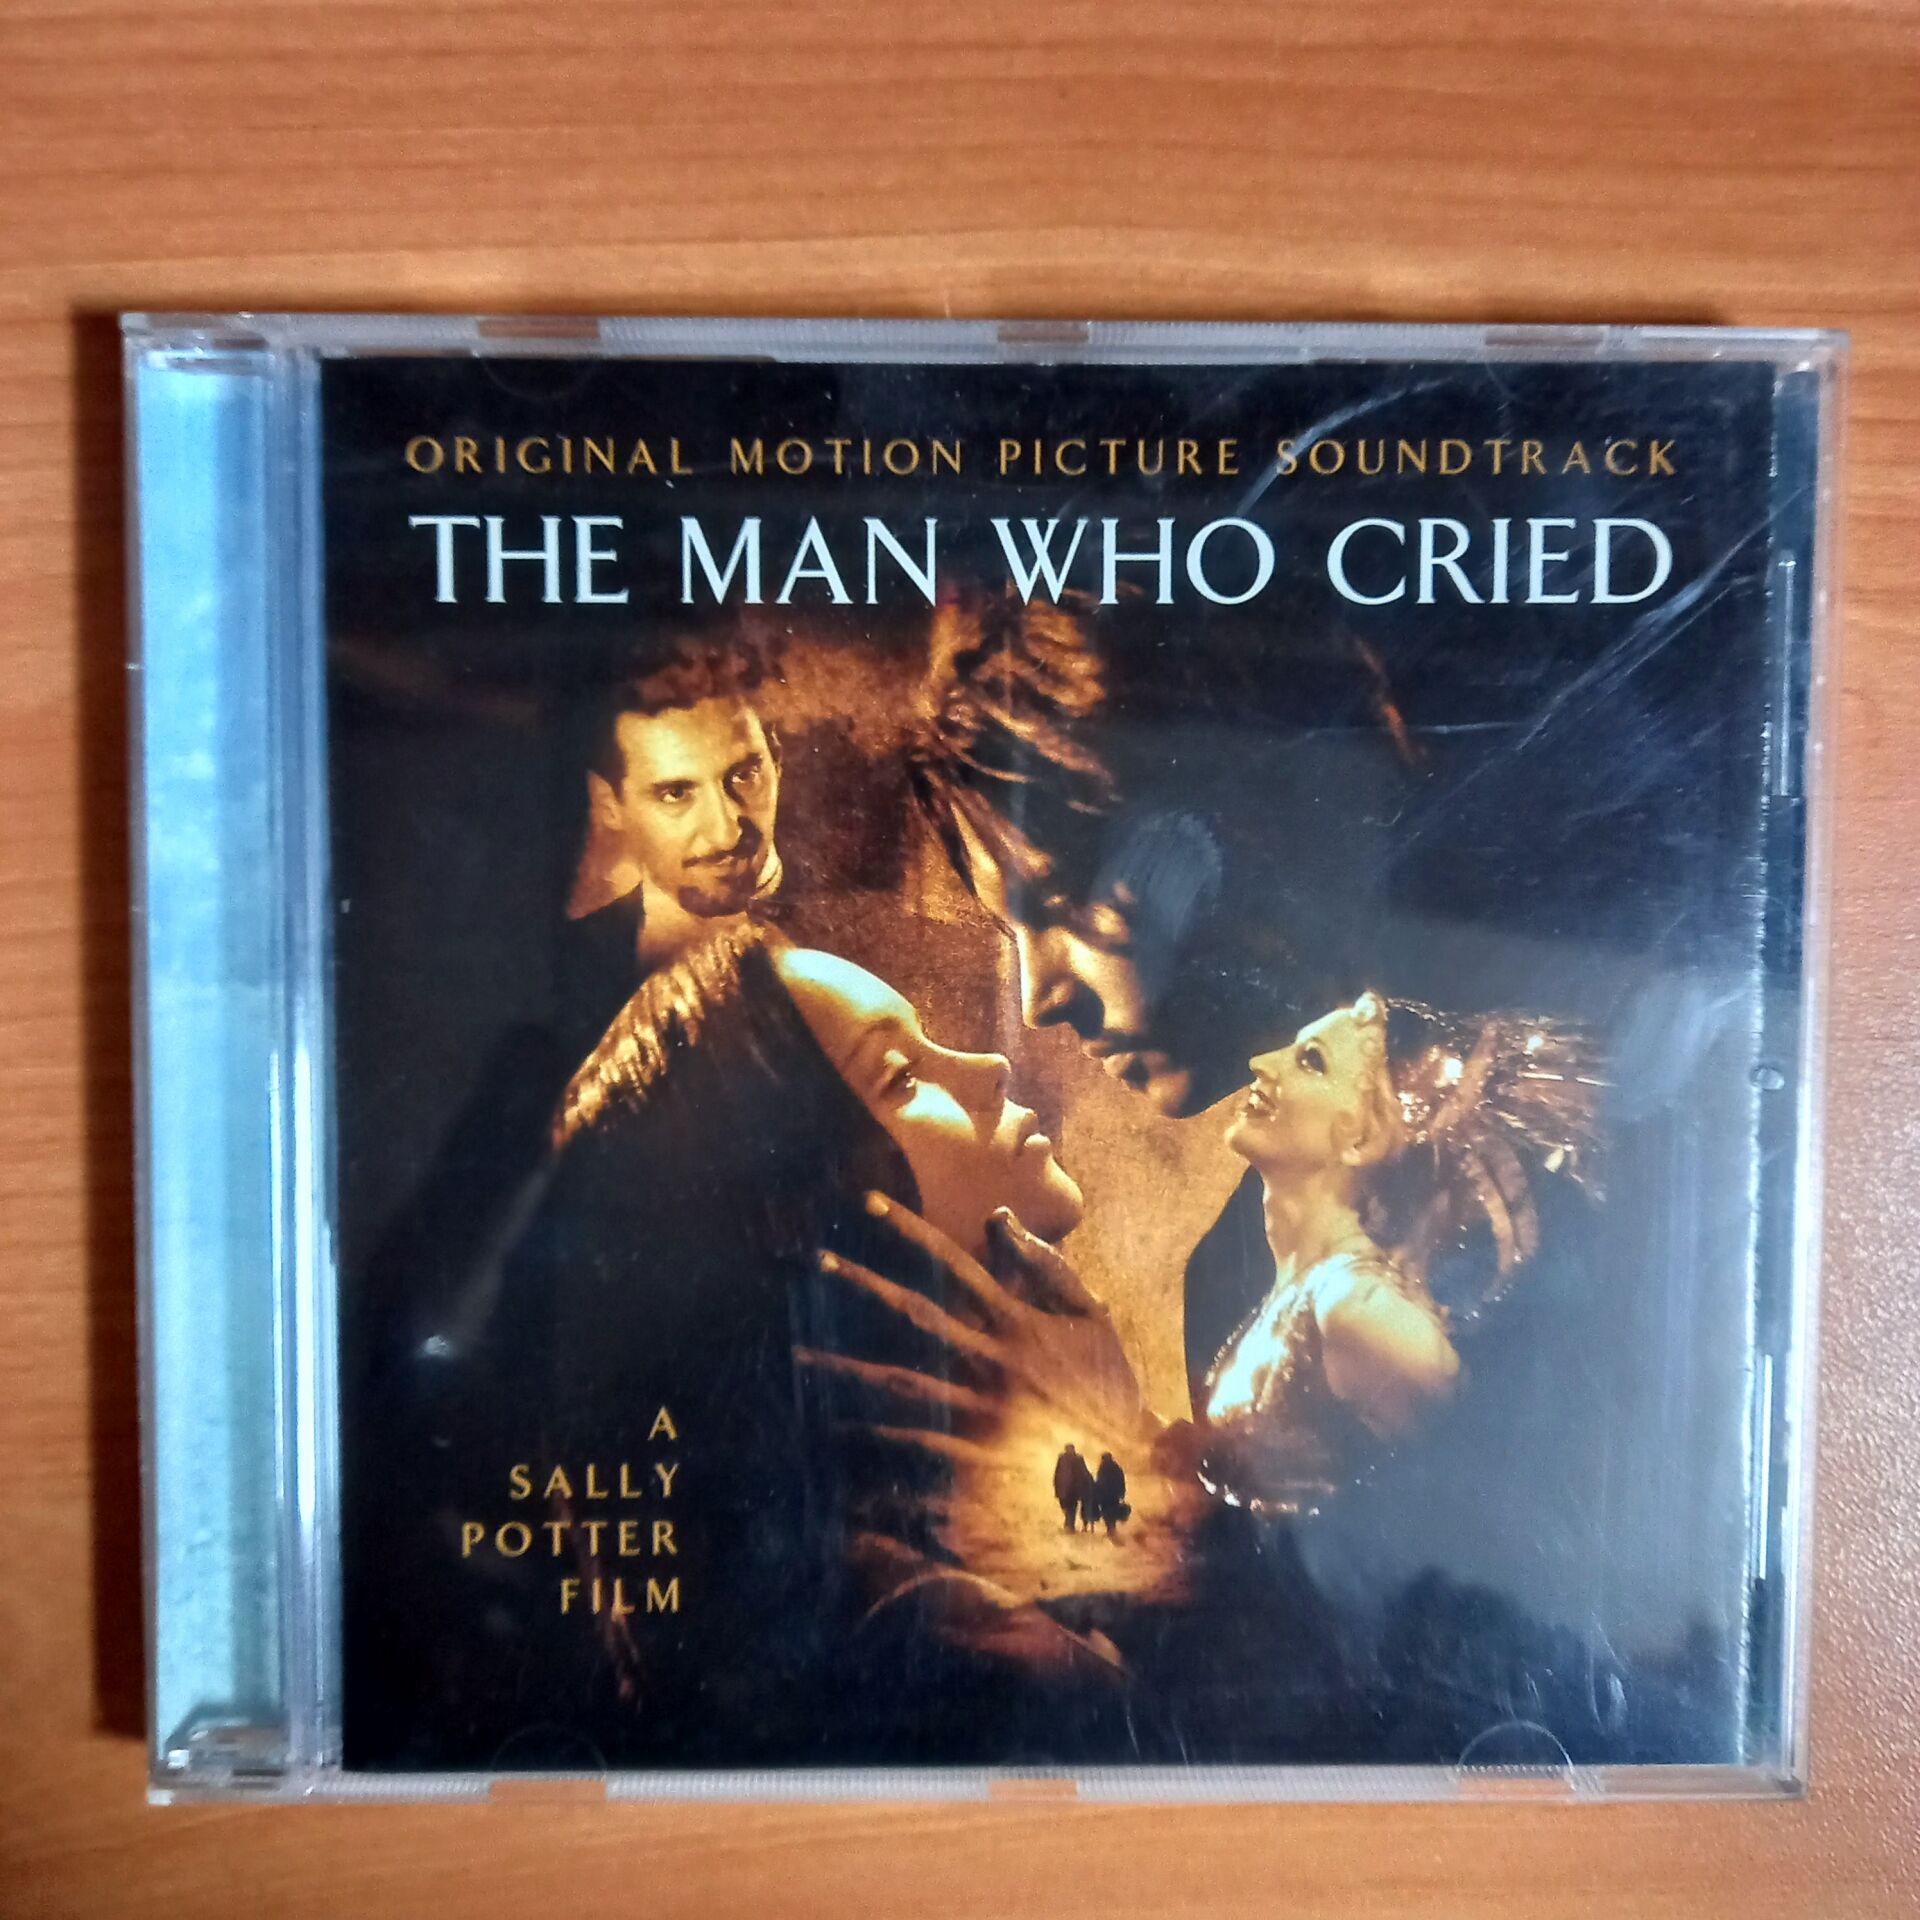 THE MAN WHO CRIED SOUNDTRACK / SALVATORE LICITRA, VASKO VASSILEV, KRONOS QUARTET - (2000) - CD 2.EL